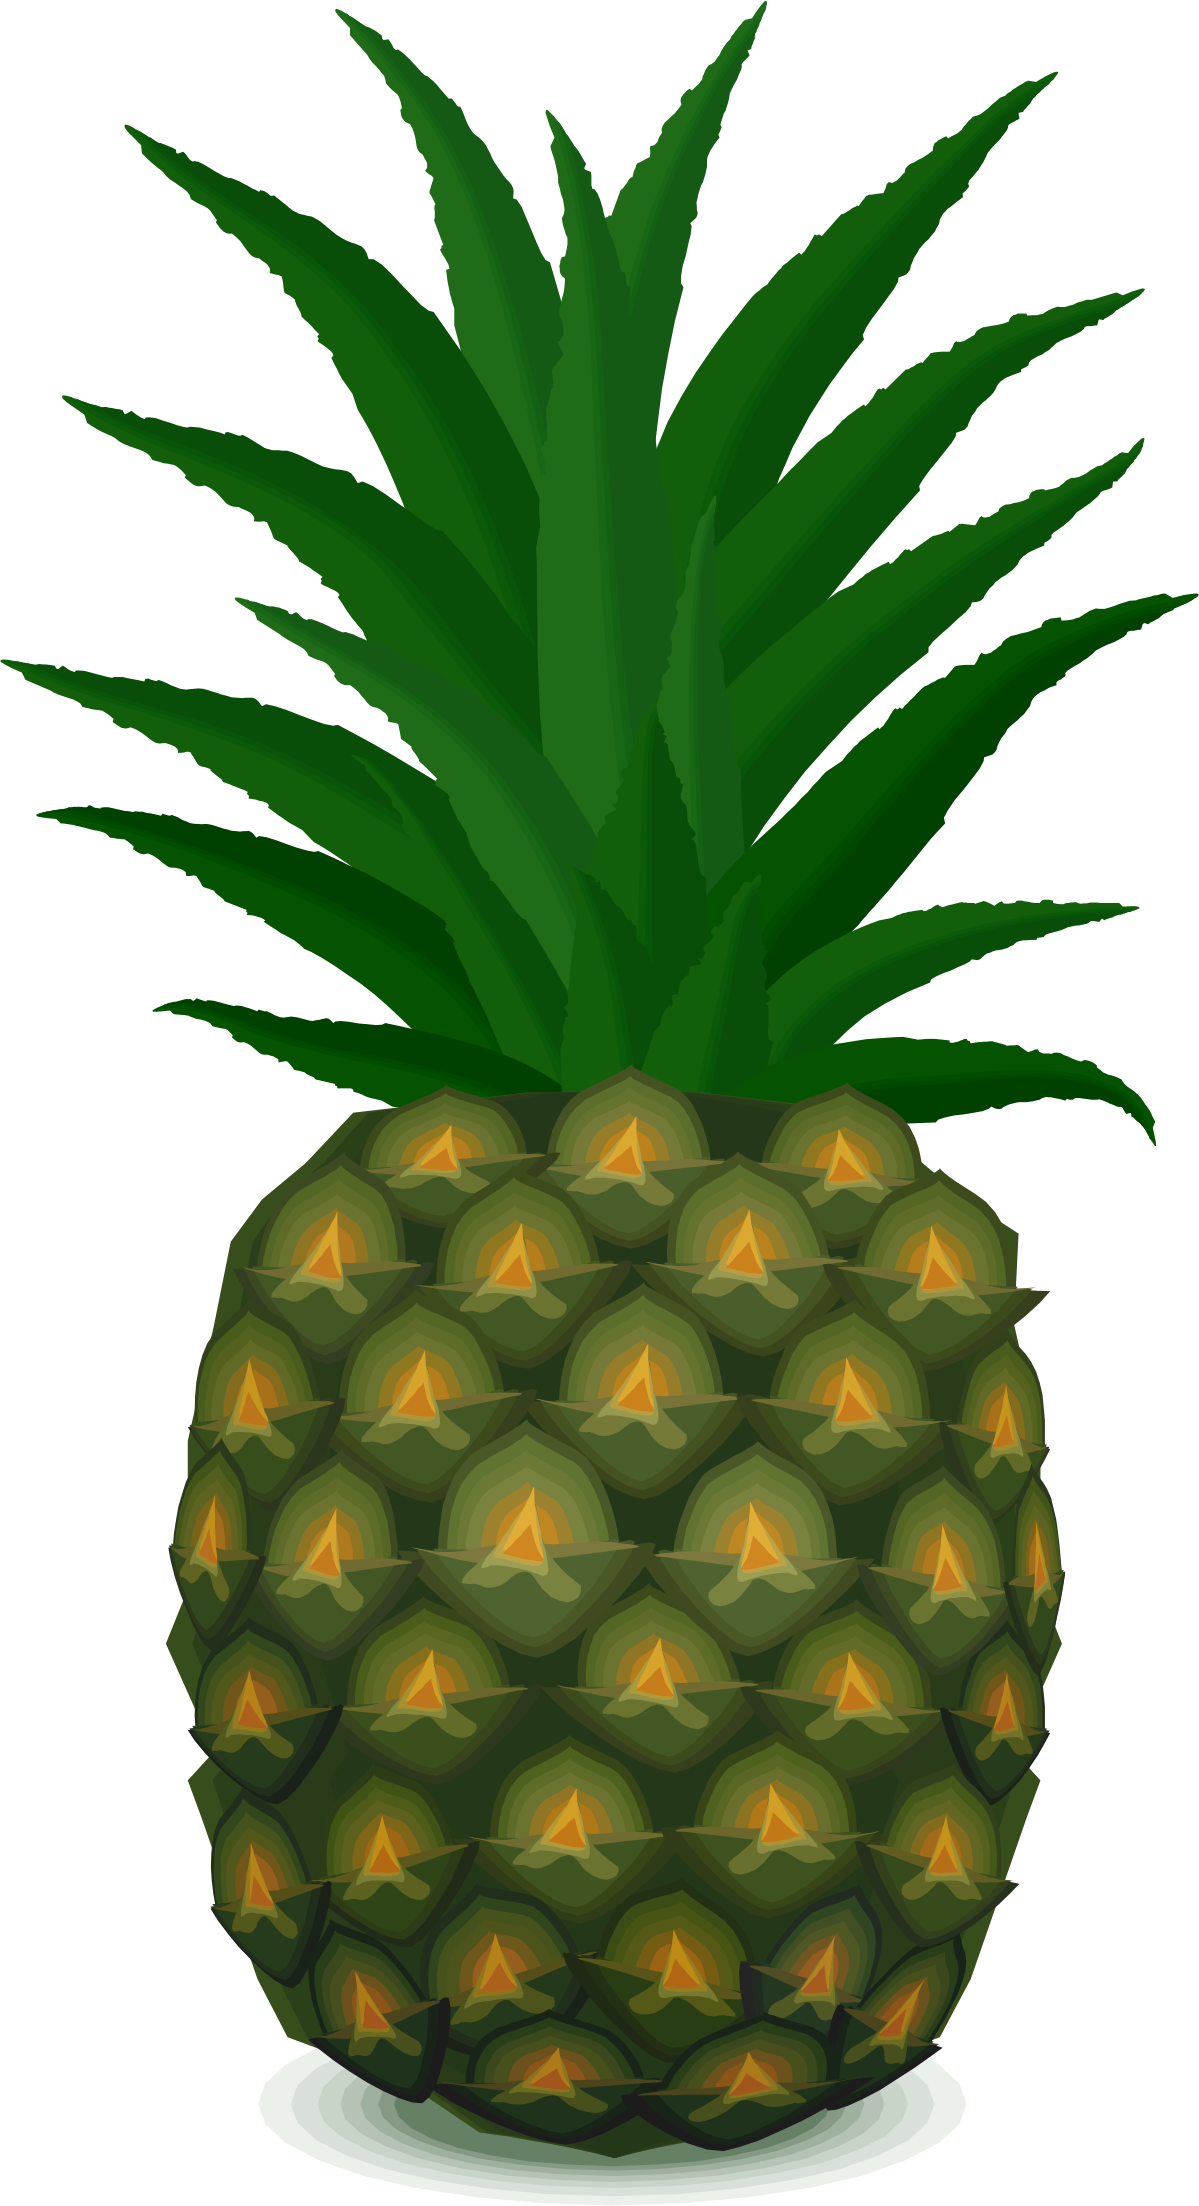 Big Image - Heart (love) Pineapple Throw Blanket (1199x2206)